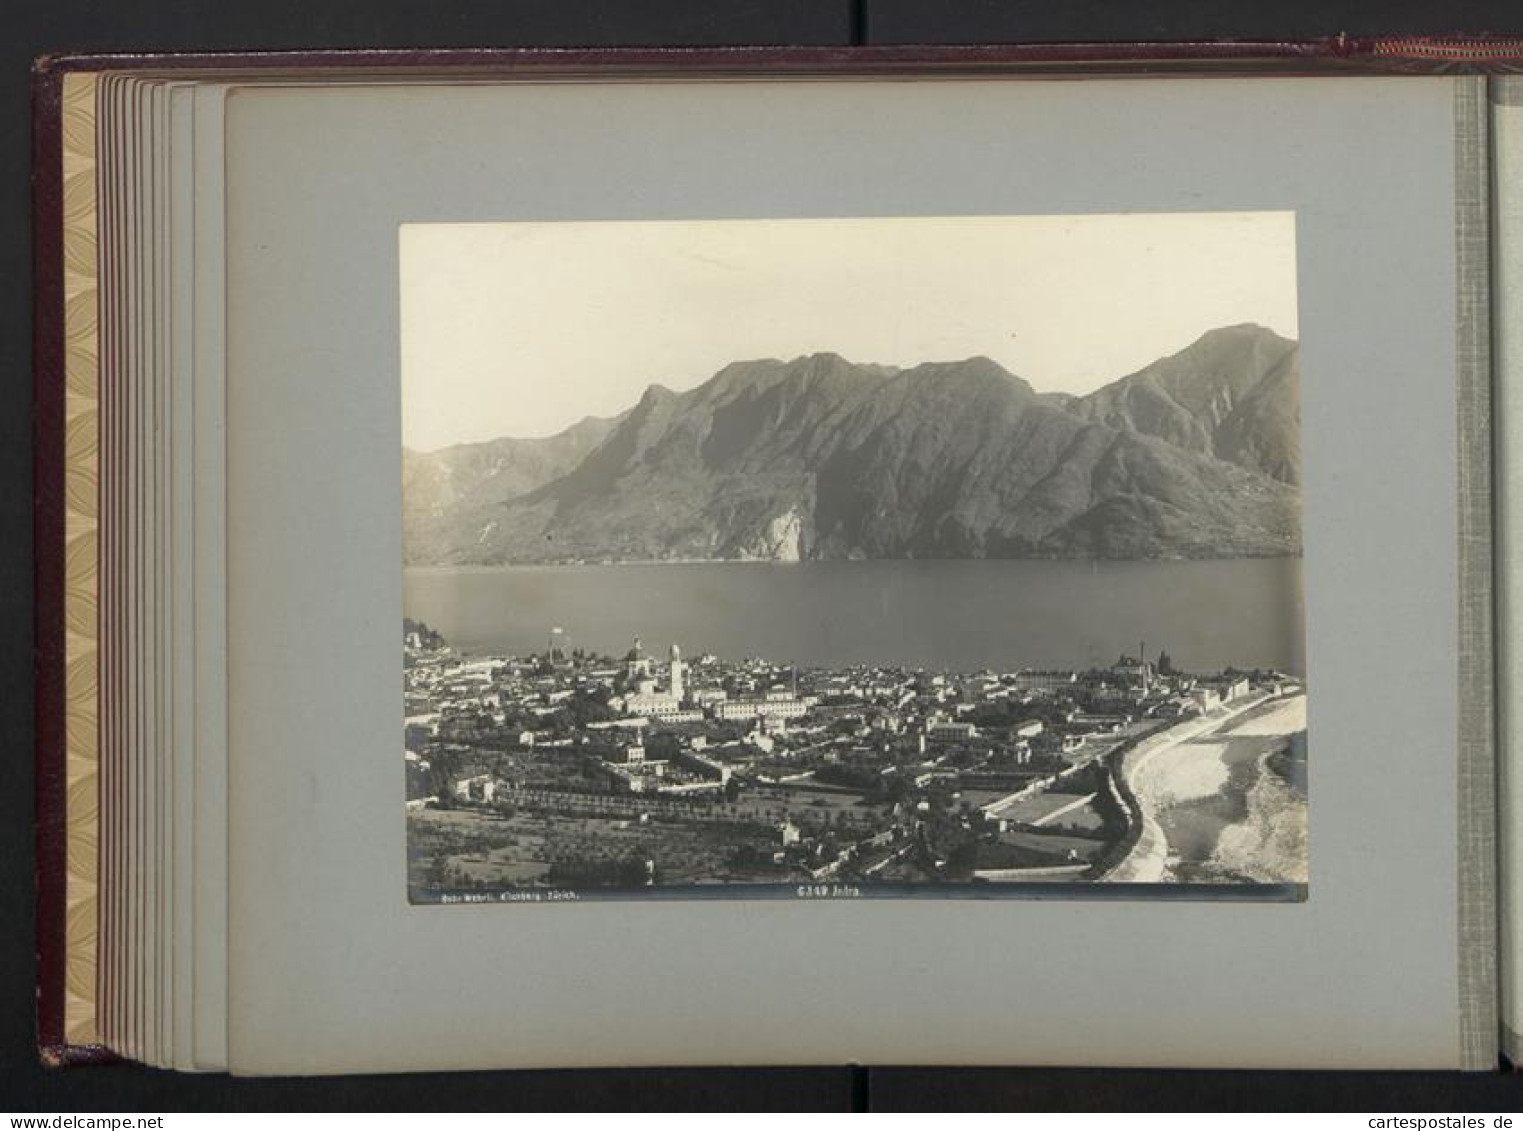 Fotoalbum mit 38 Fotografien, Ansicht Lugano, Panorama vom Monte Salvatore, Morcote, Gandria, Lago di Lugano 